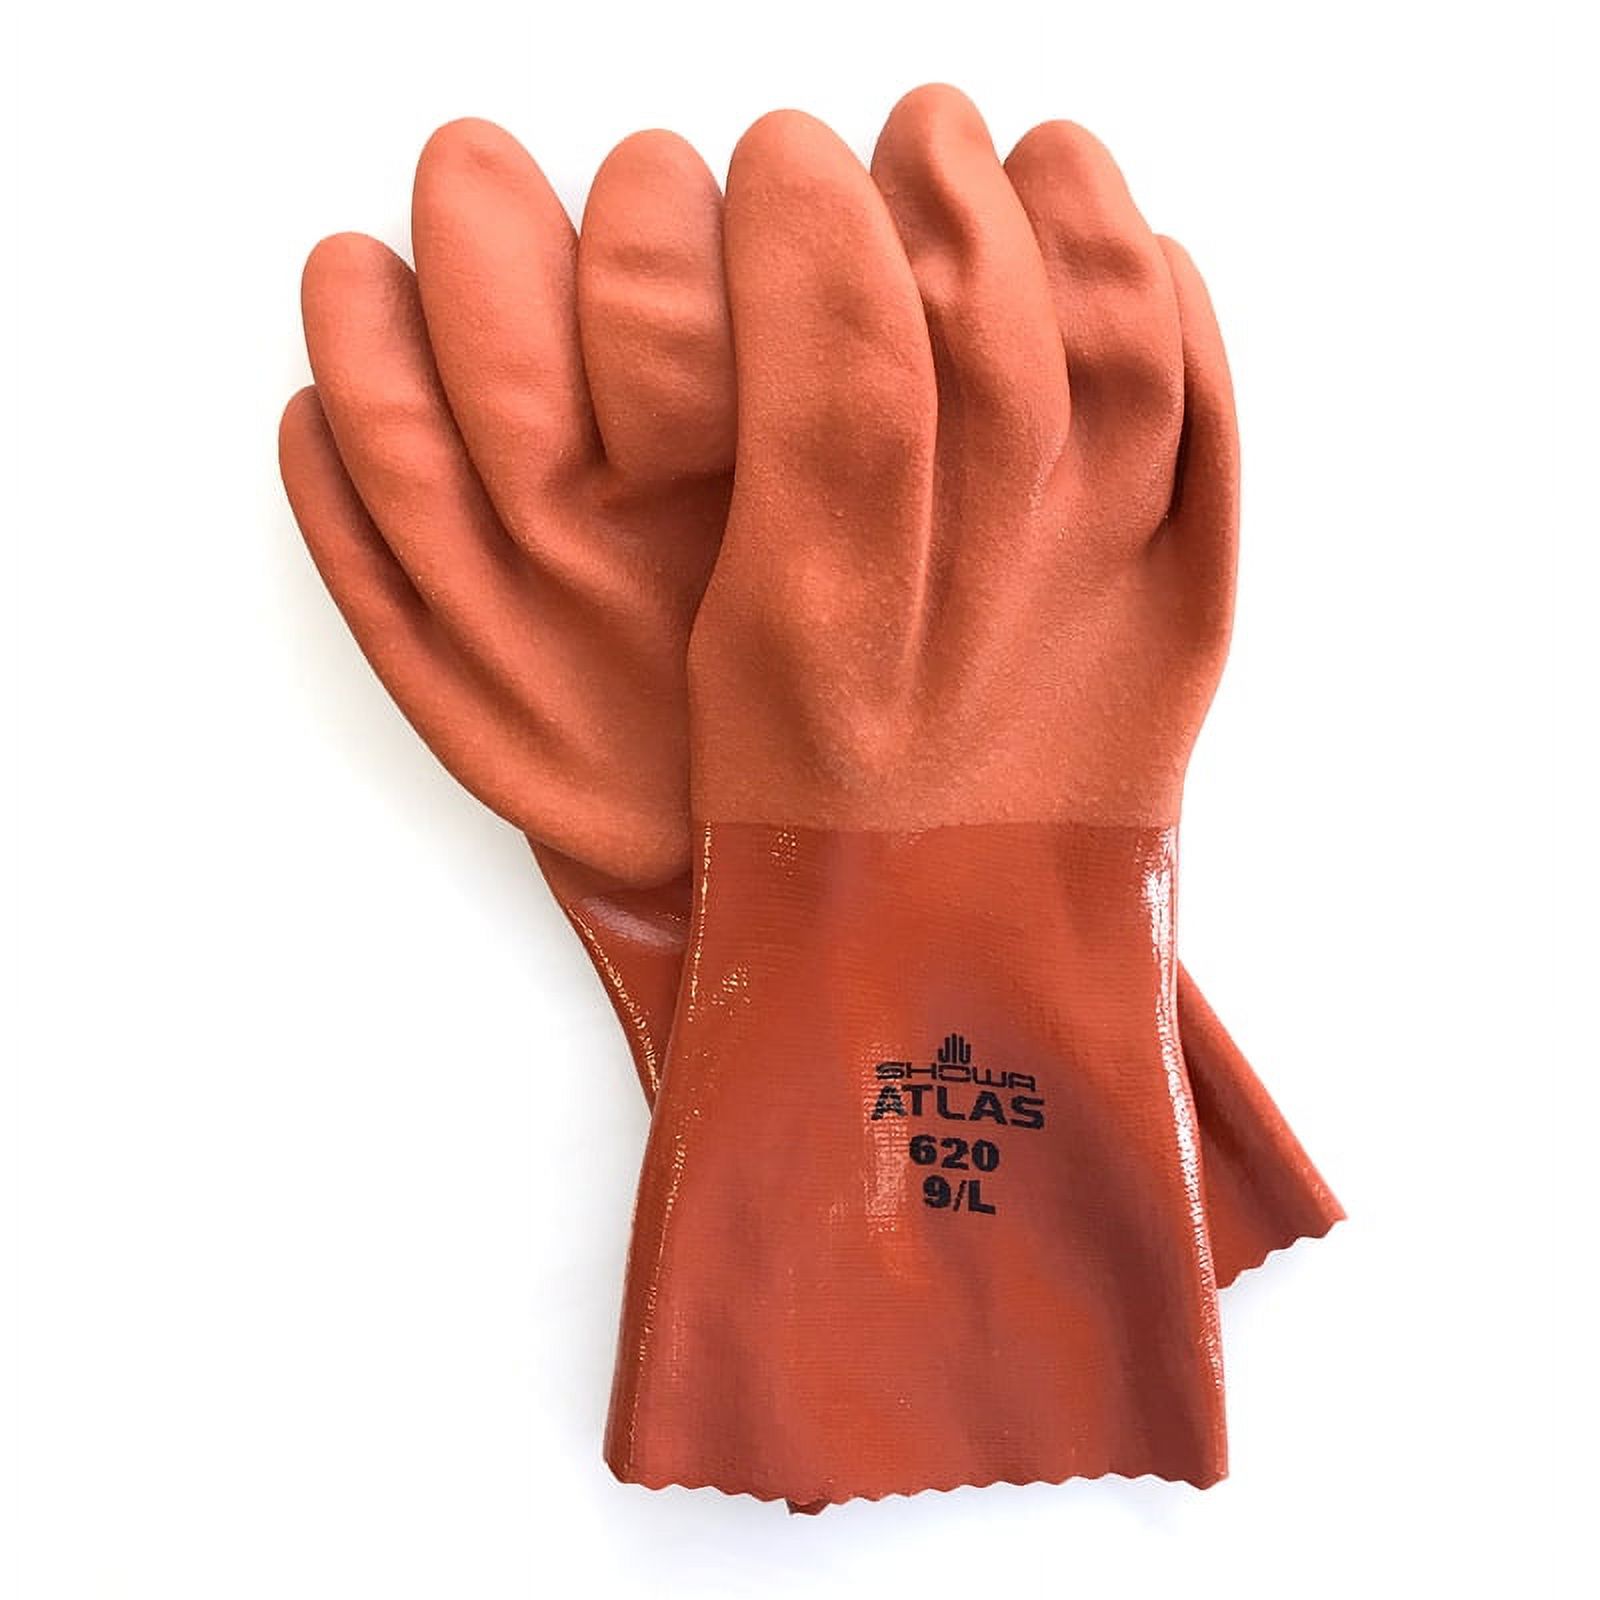 Atlas Vinylove PVC Gloves - image 3 of 6